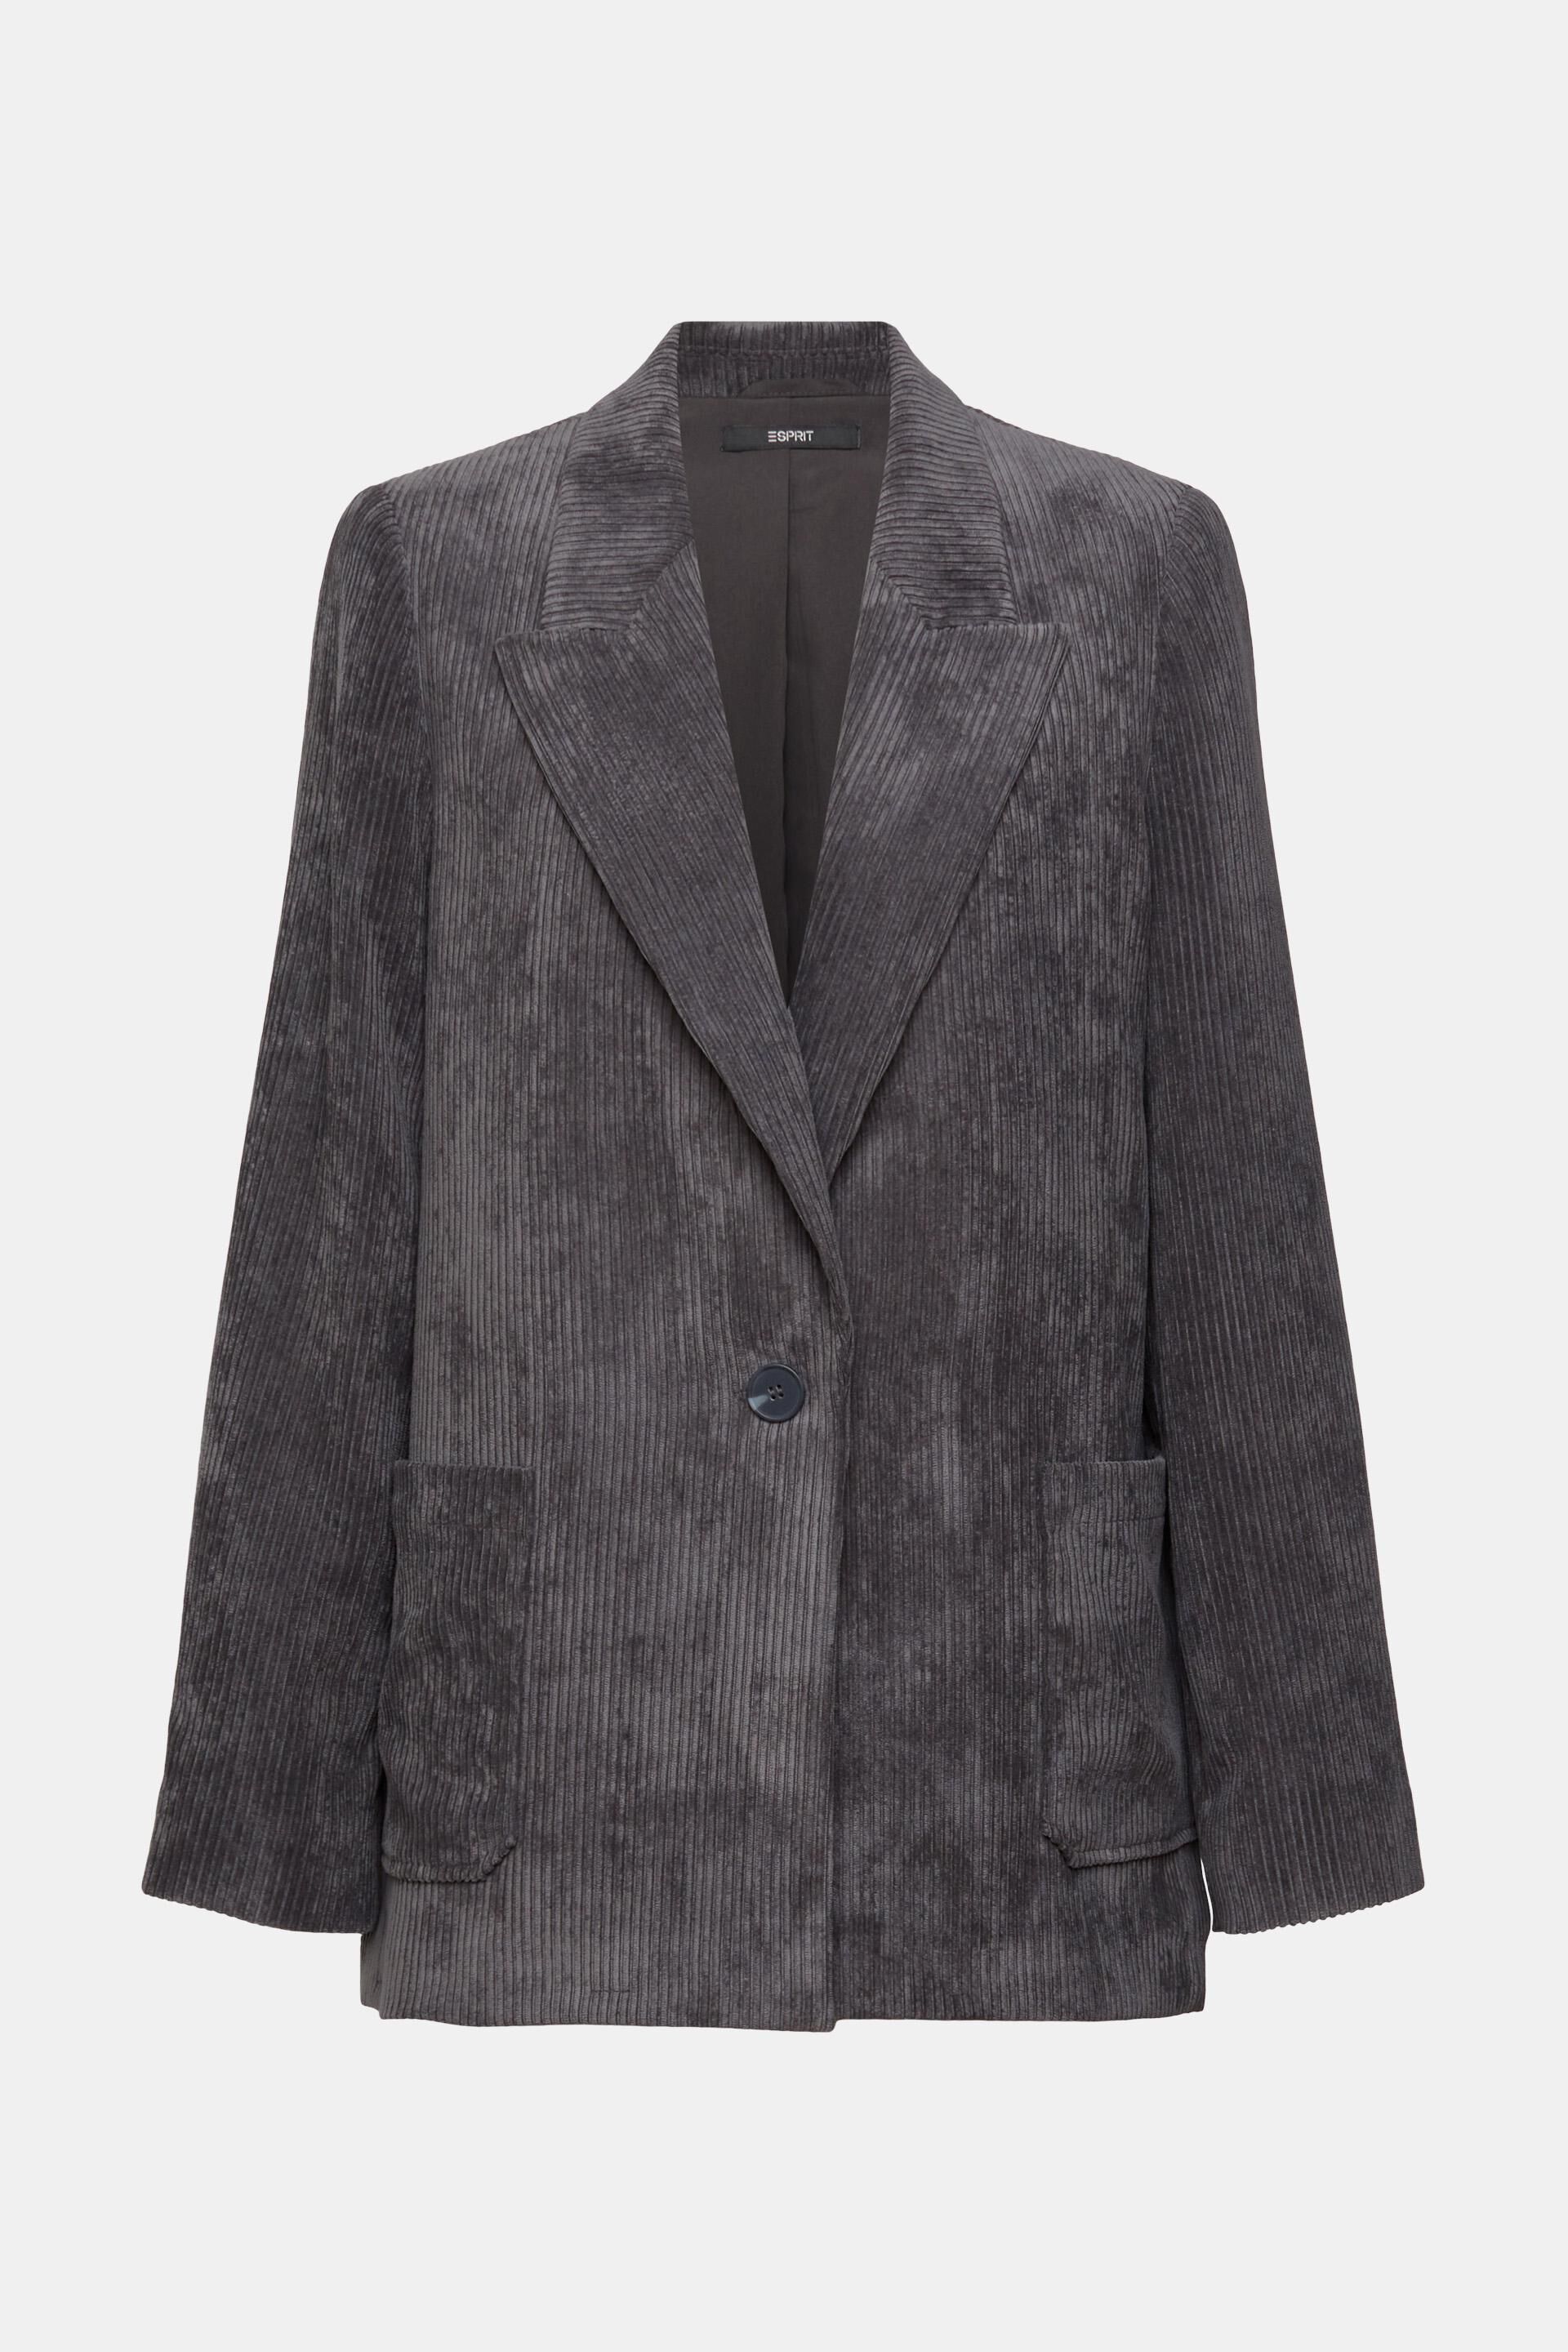 Esprit Spijkerblazer grijs-grijs-lila extravagante stijl Mode Blazers Spijkerblazers 